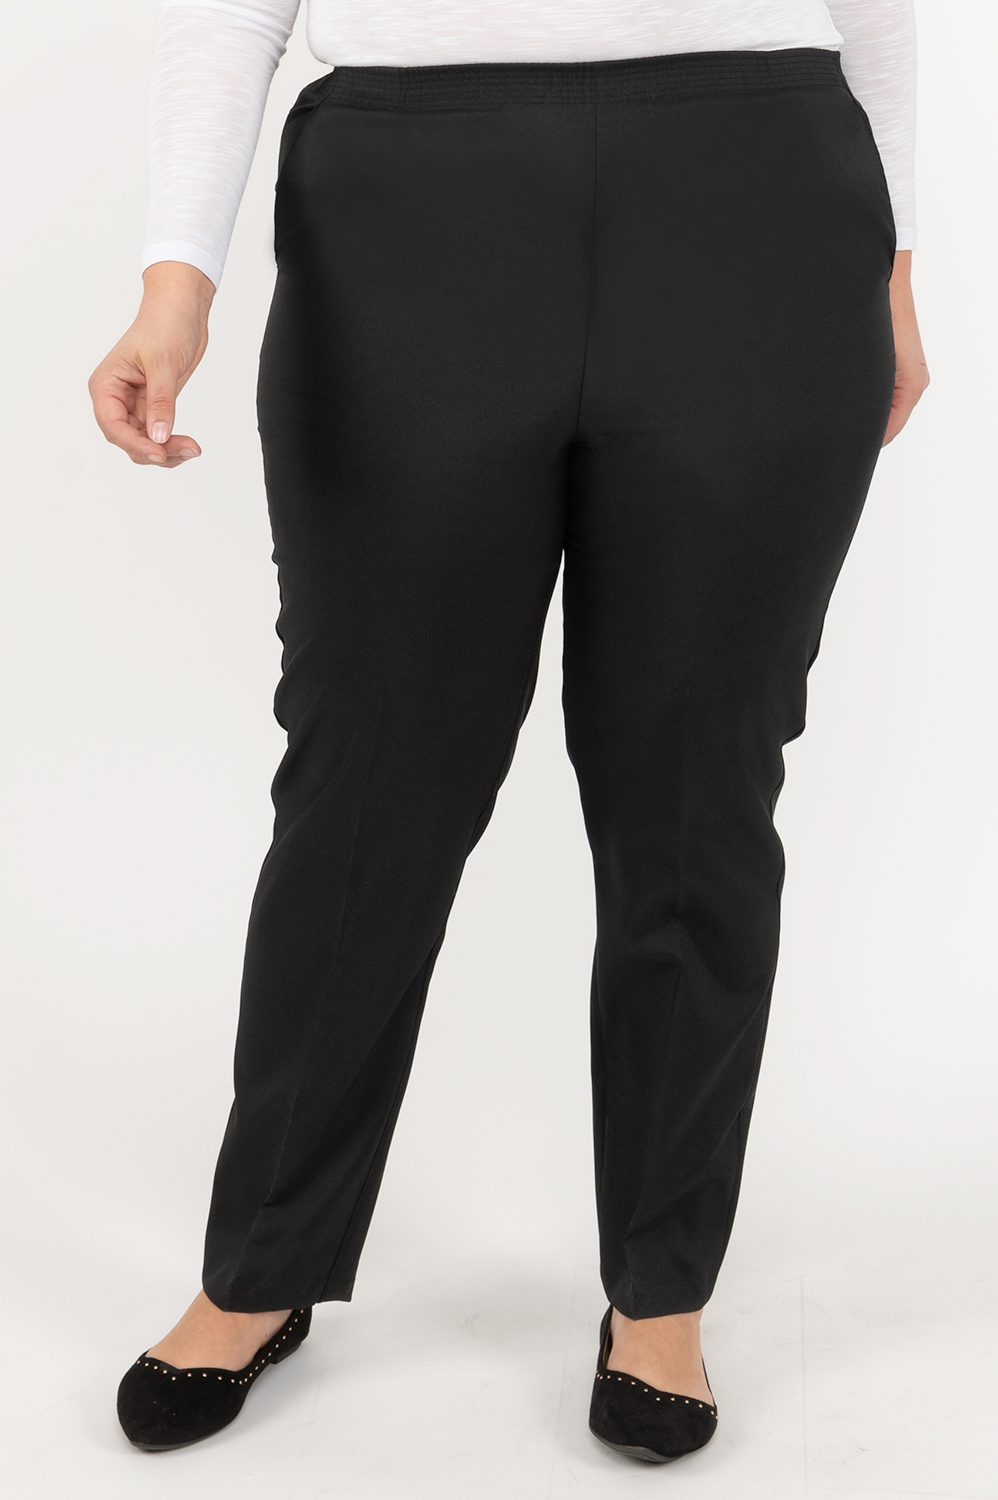 https://www.rossy.ca/media/A2W/products/elastic-waist-pull-on-pants-black-plus-size-74311-1.jpg